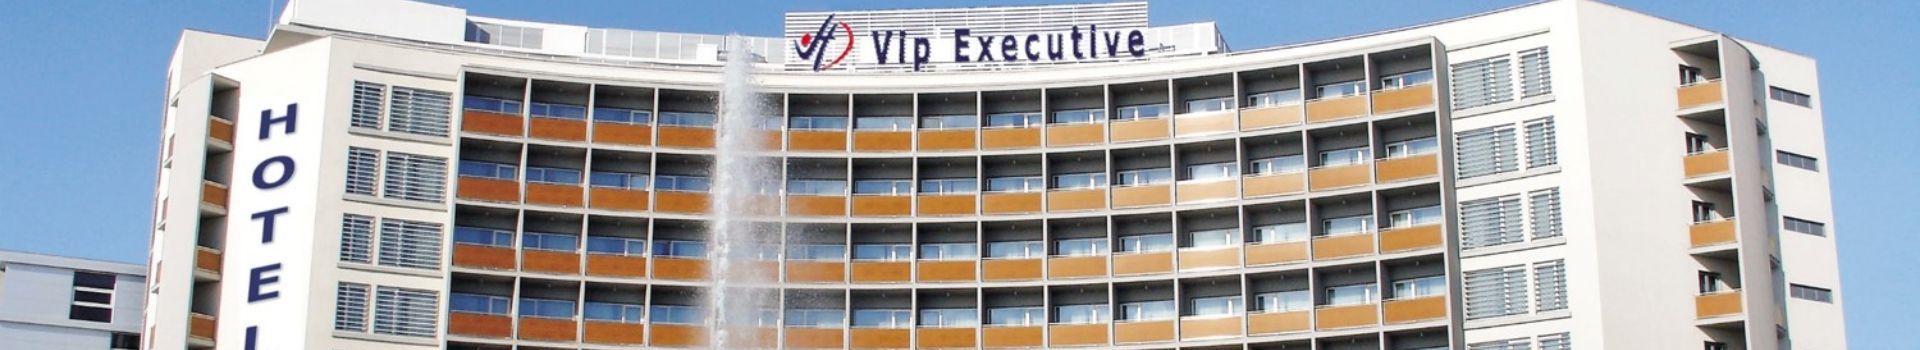  VIP Executive Azores Hotel Ponta Delgada